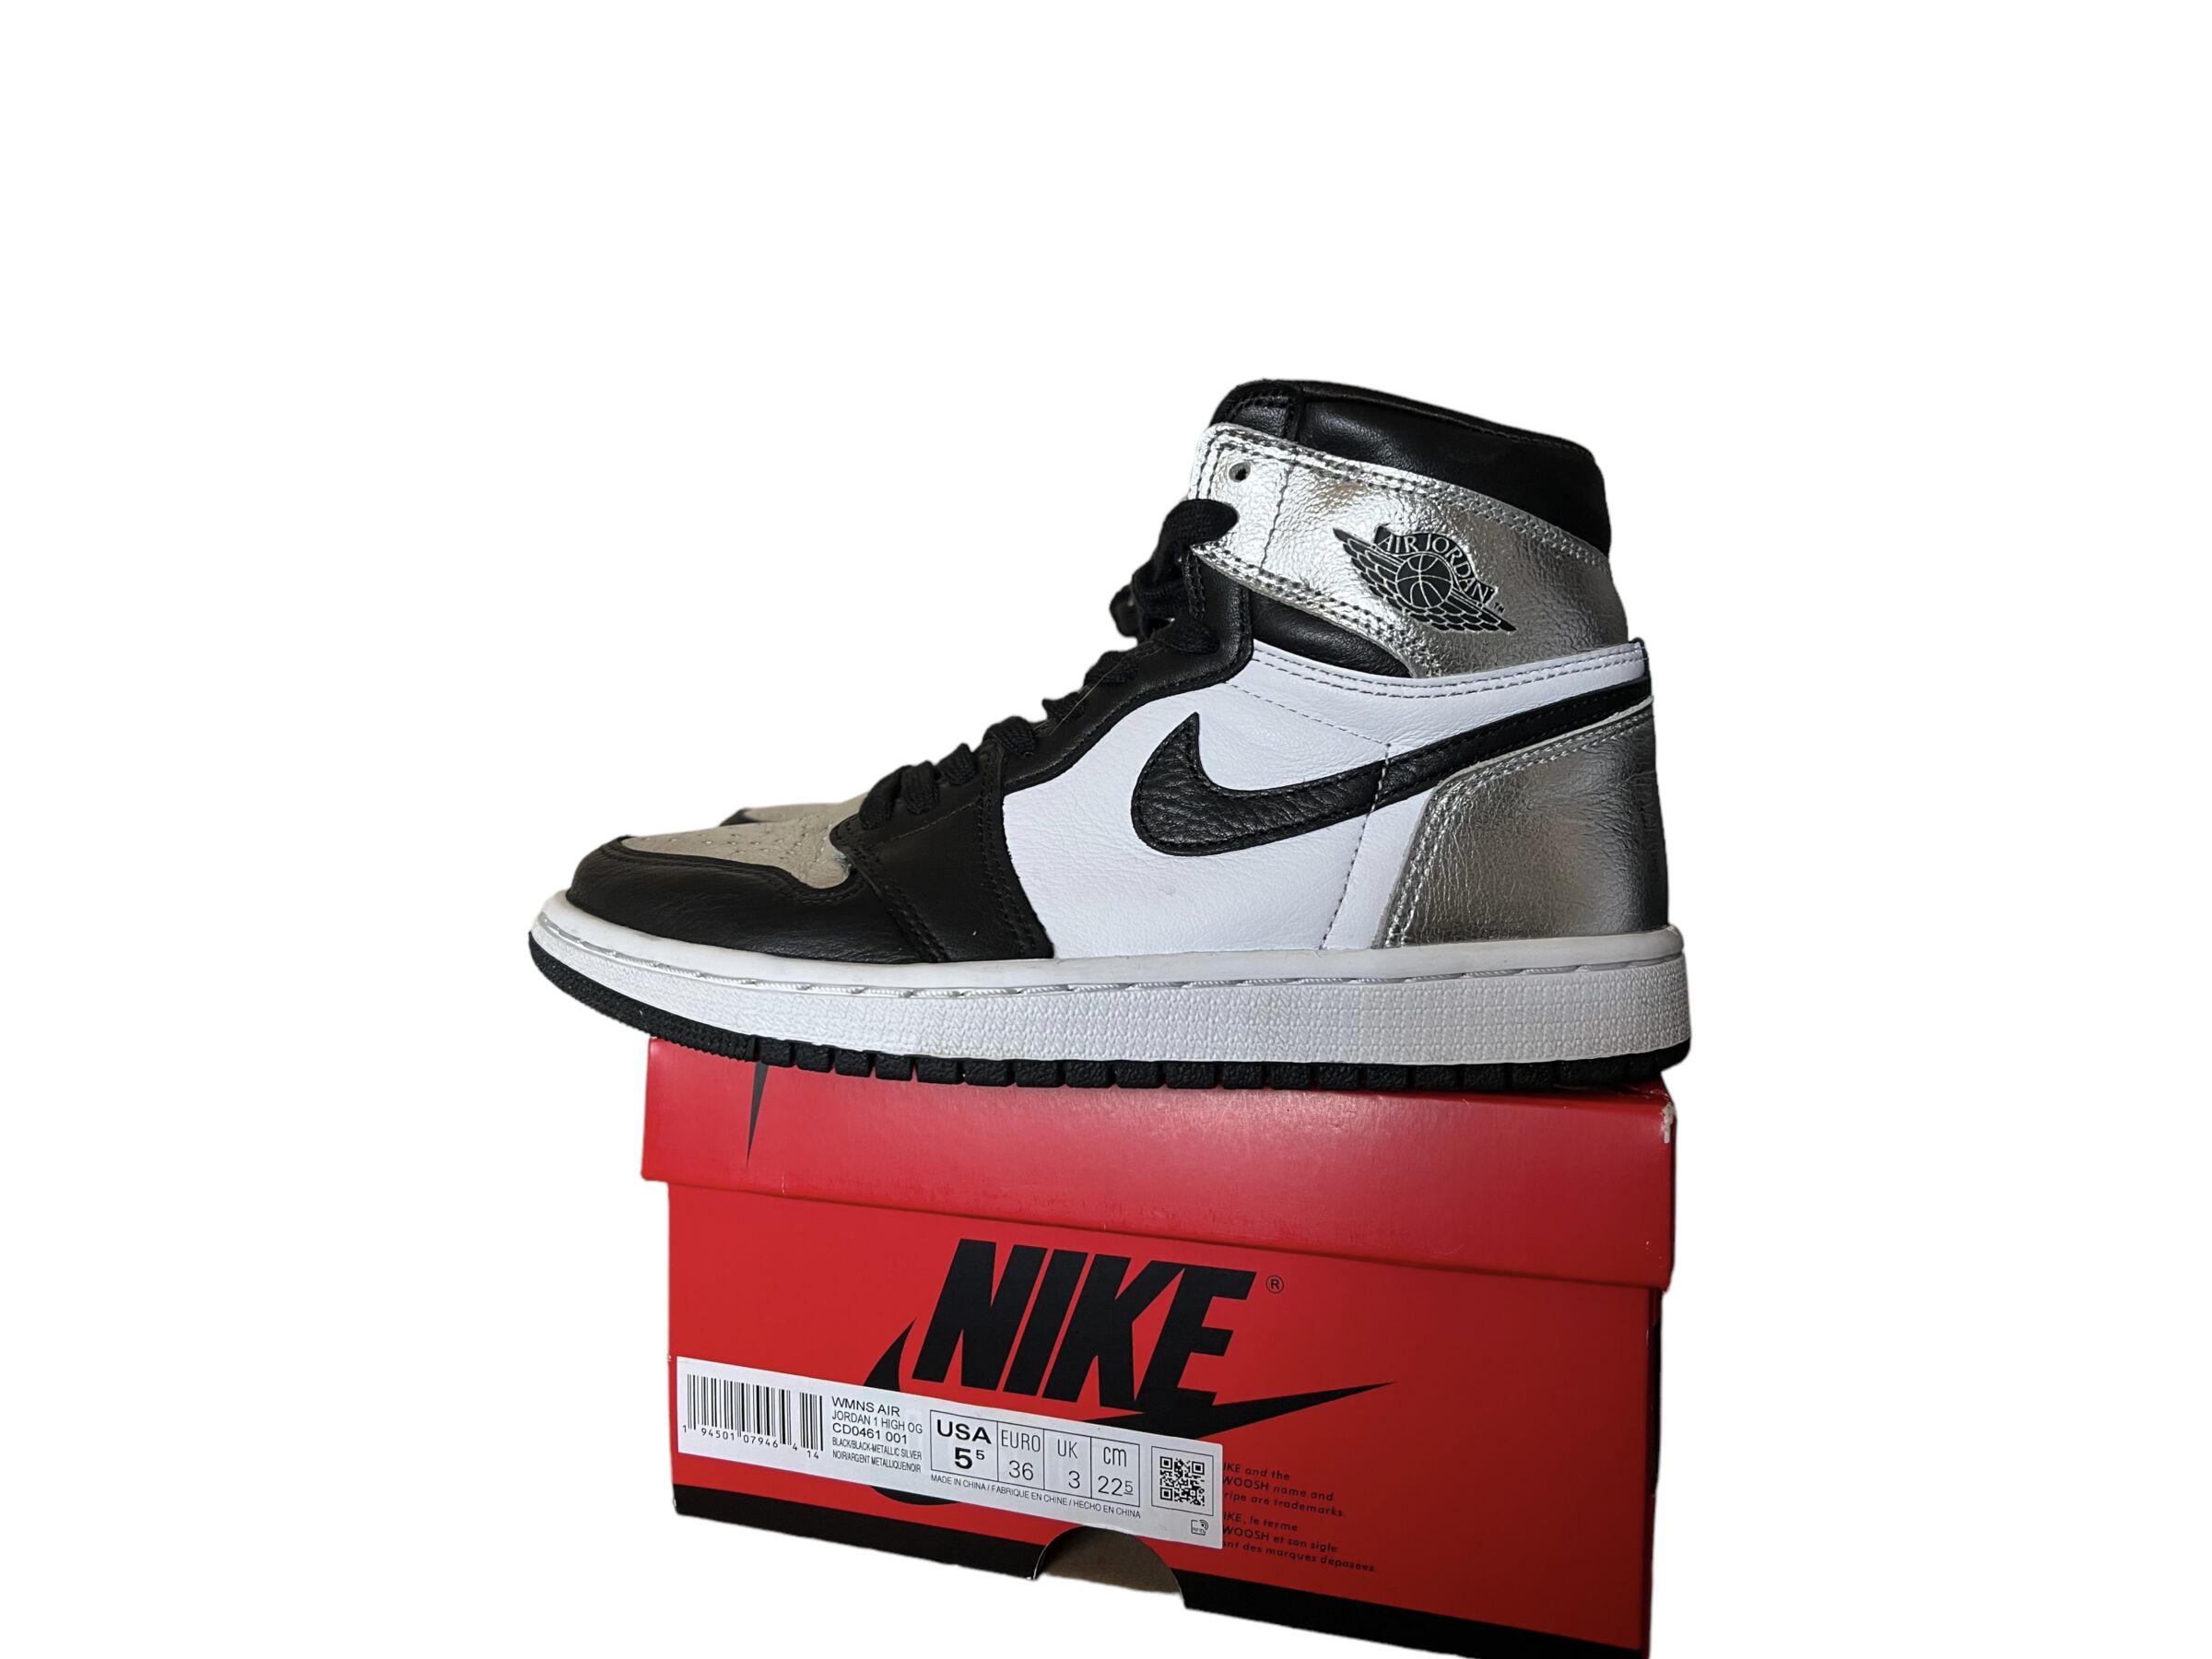 Air Jordan 1 Retro High OG "Silver Toe" cipő (36)